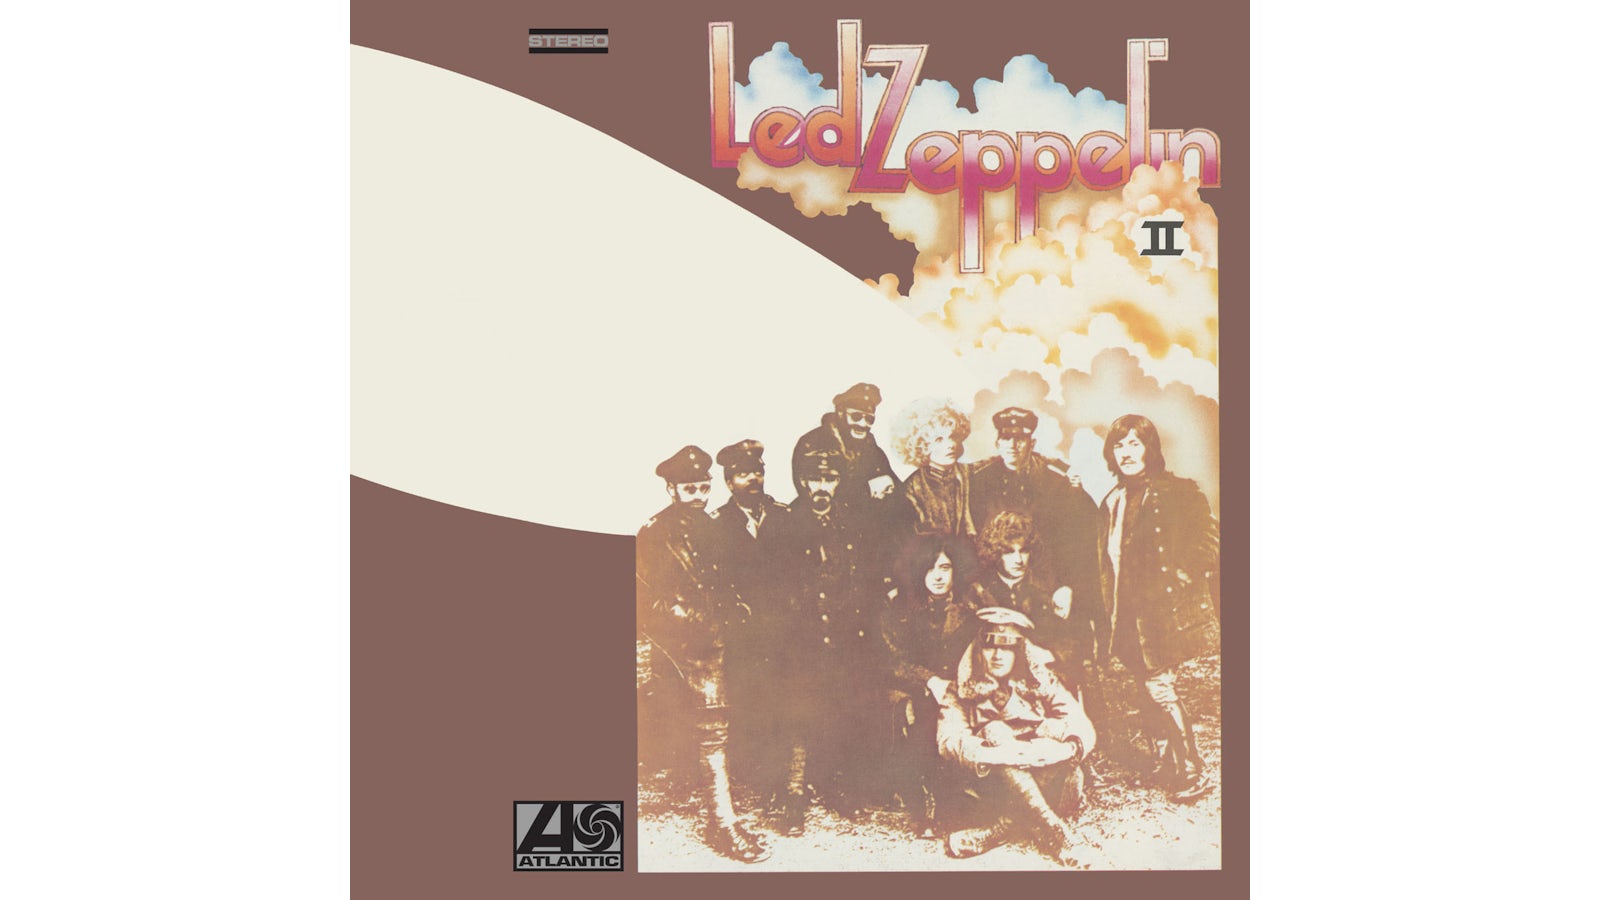 Led Zeppelin II (180g) Record